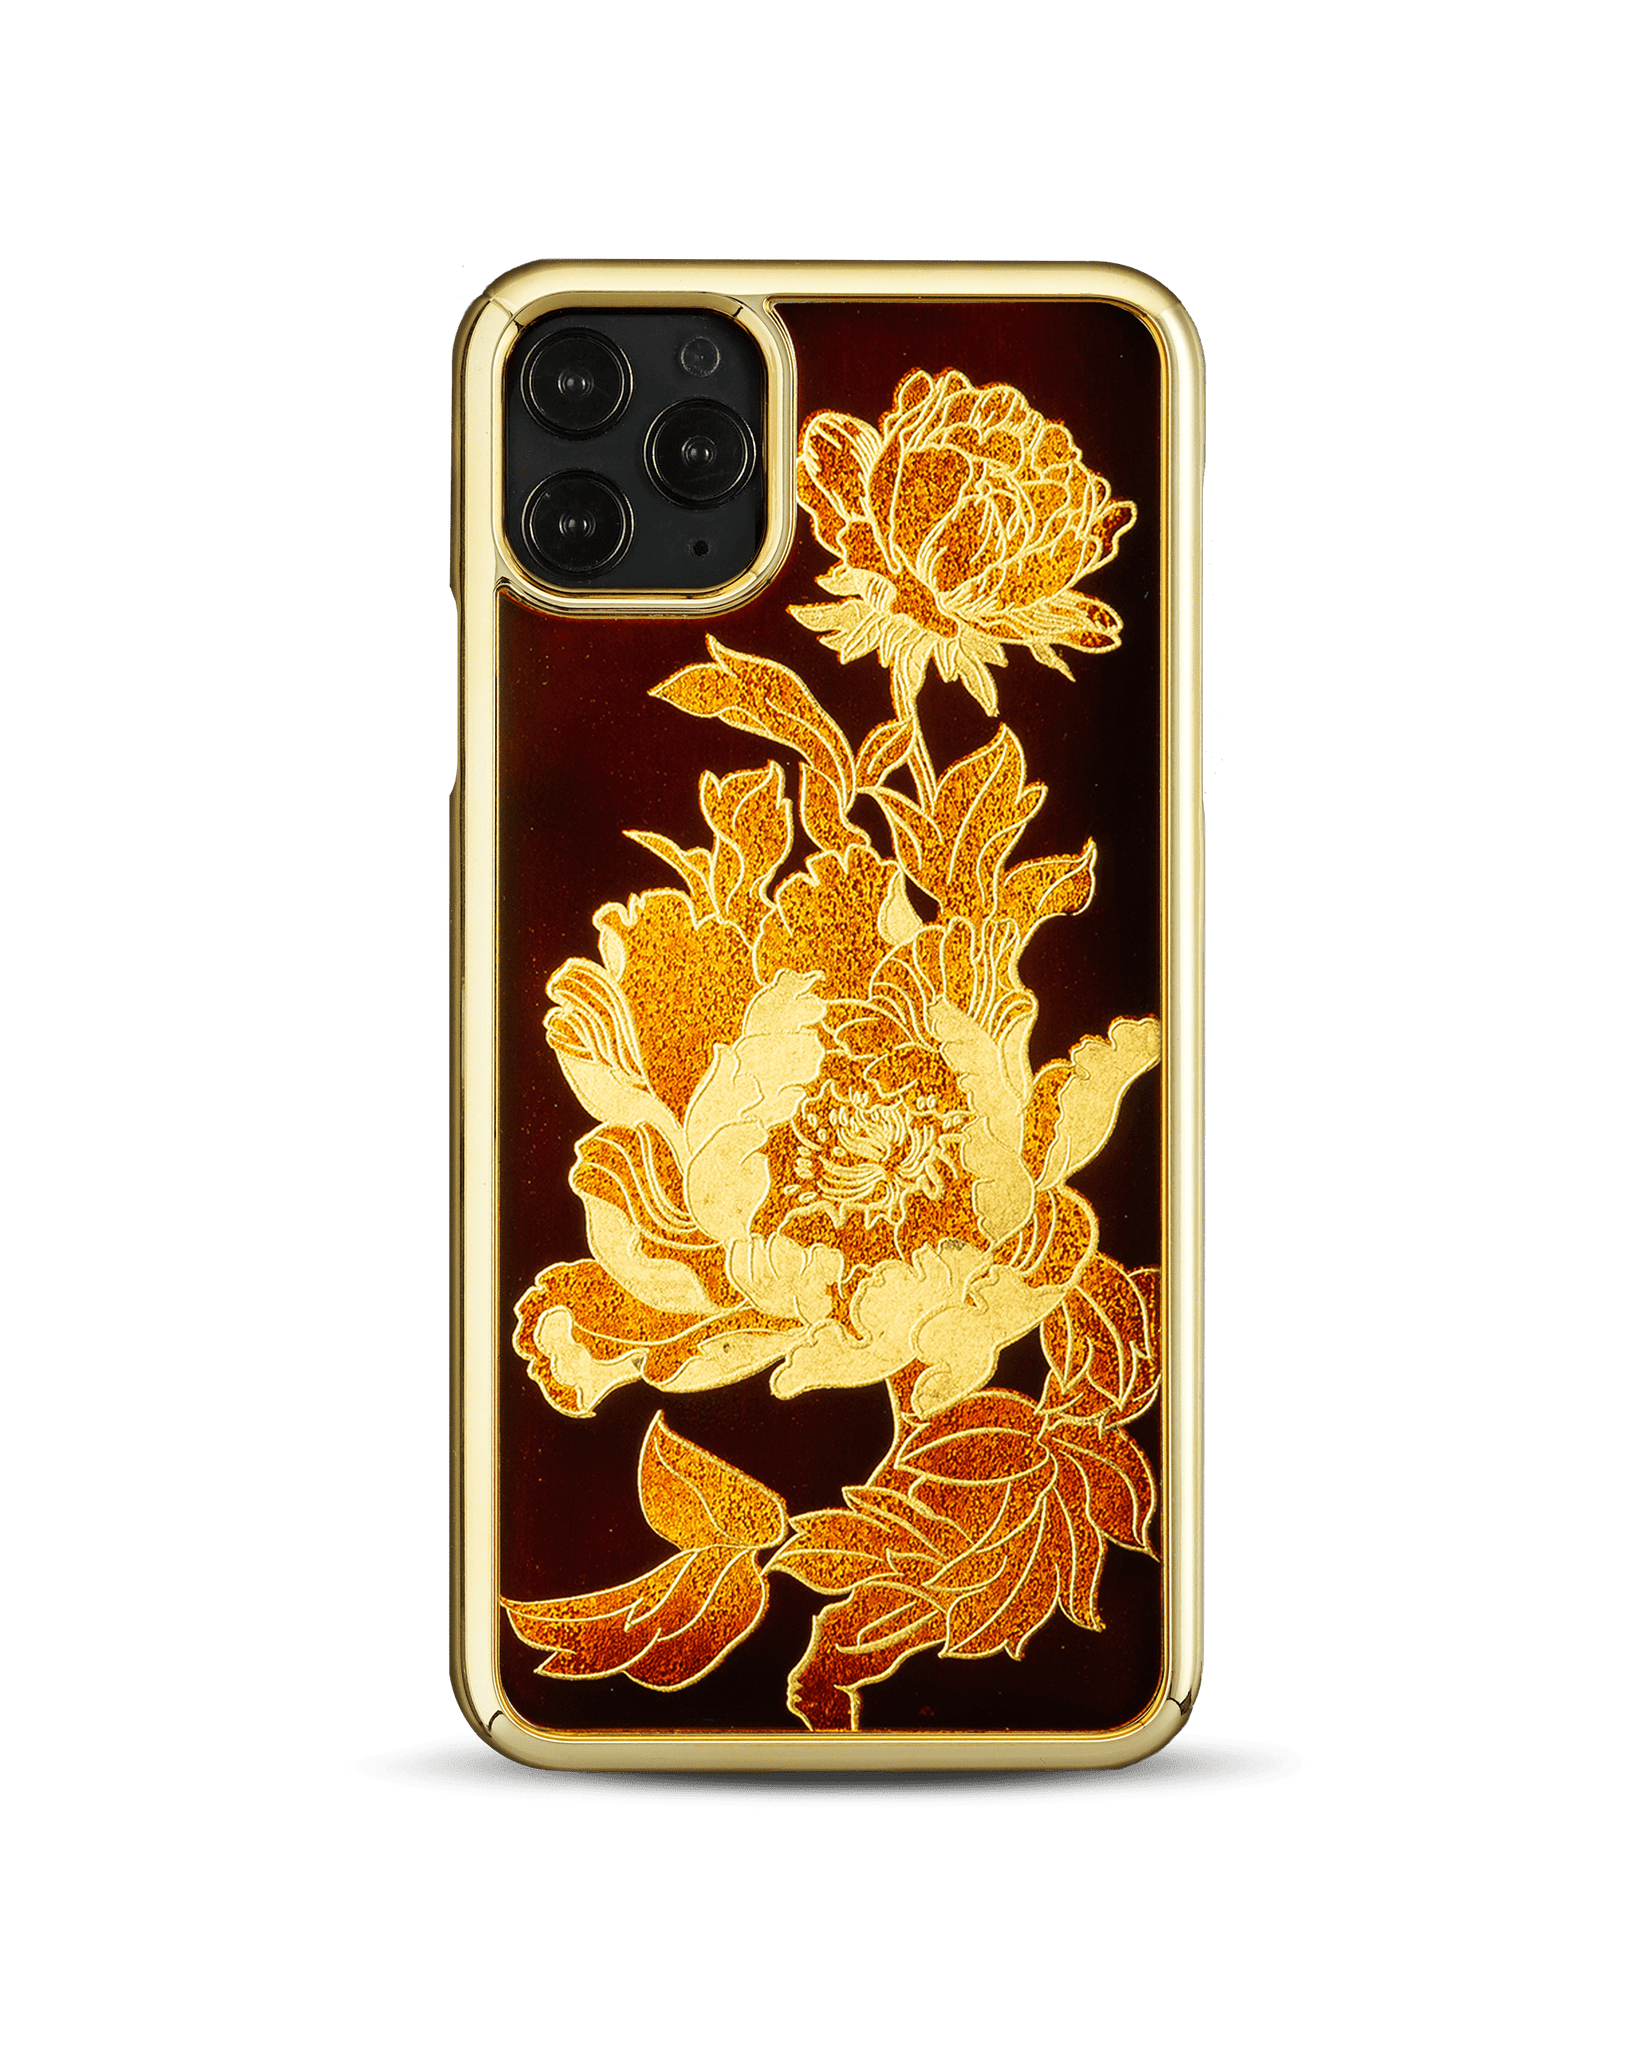 Hoa Mẫu Đơn, iPhone Xs Max (Golden edition)